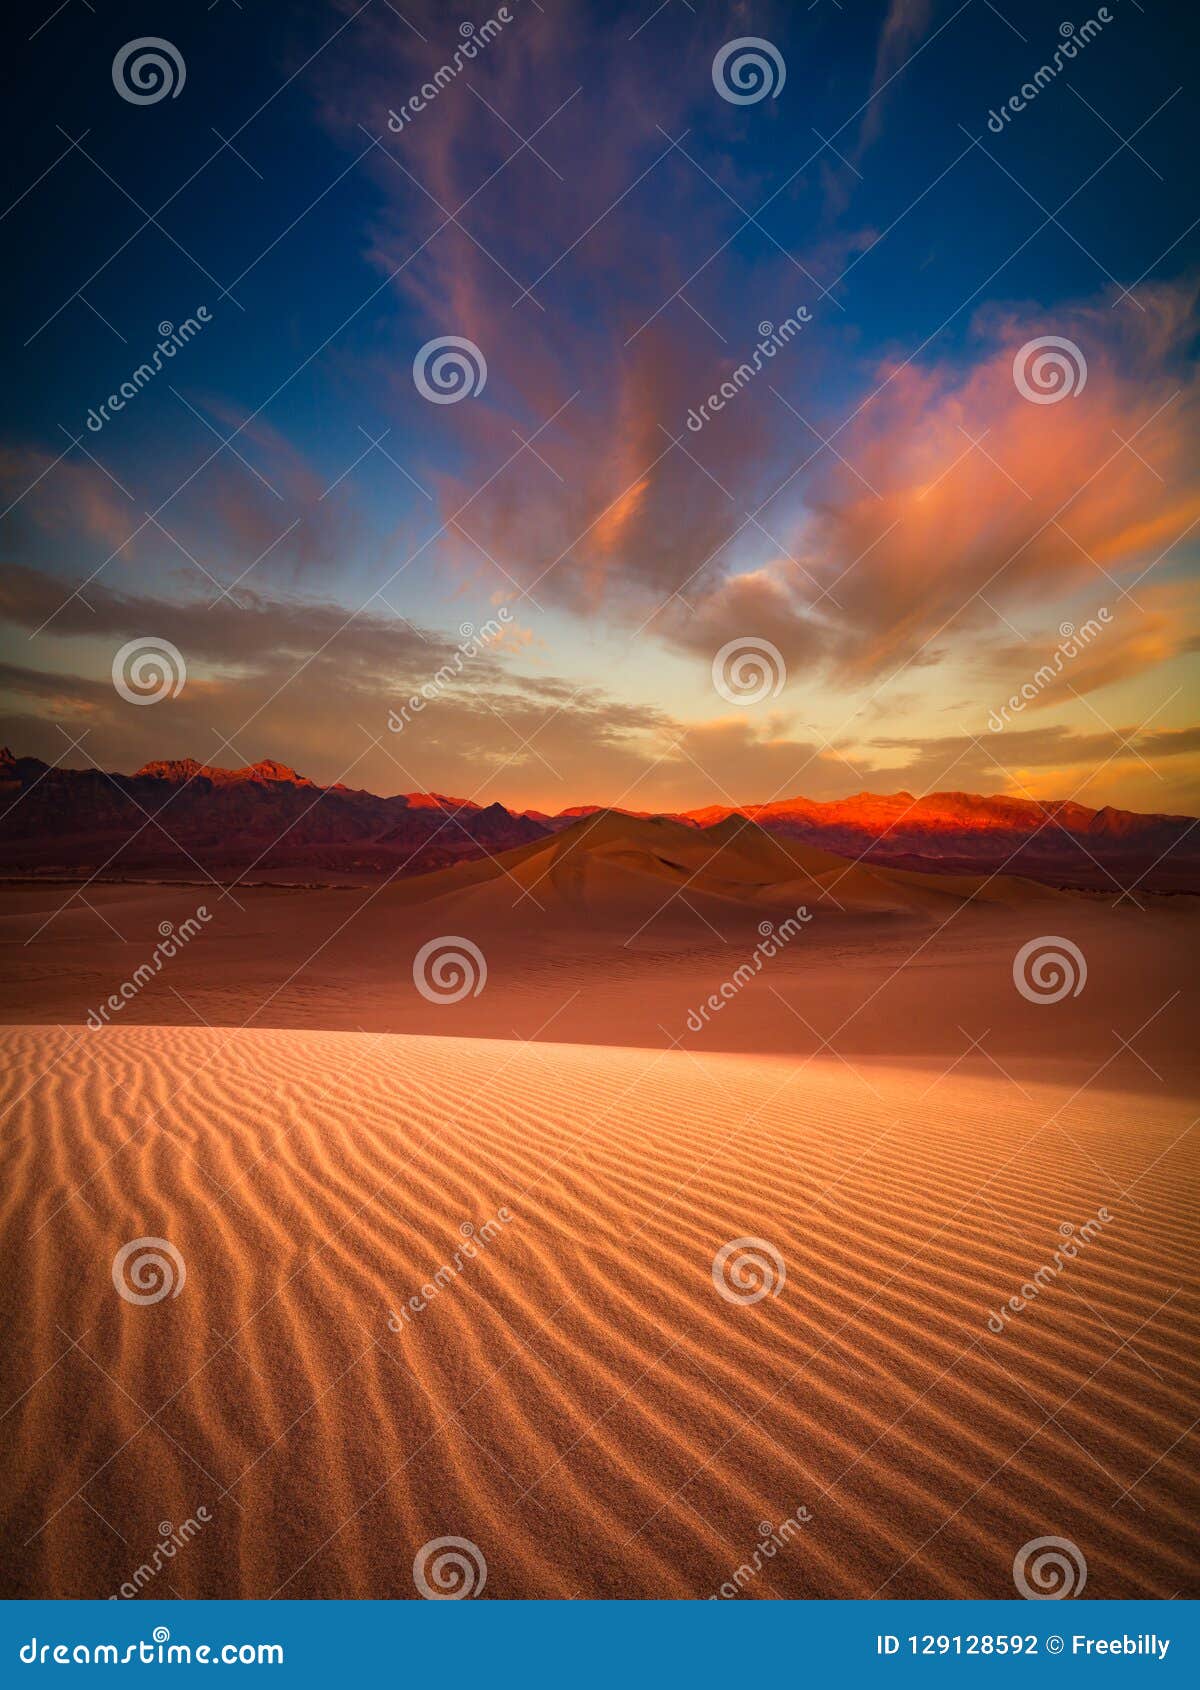 death valley sand dune at dusk